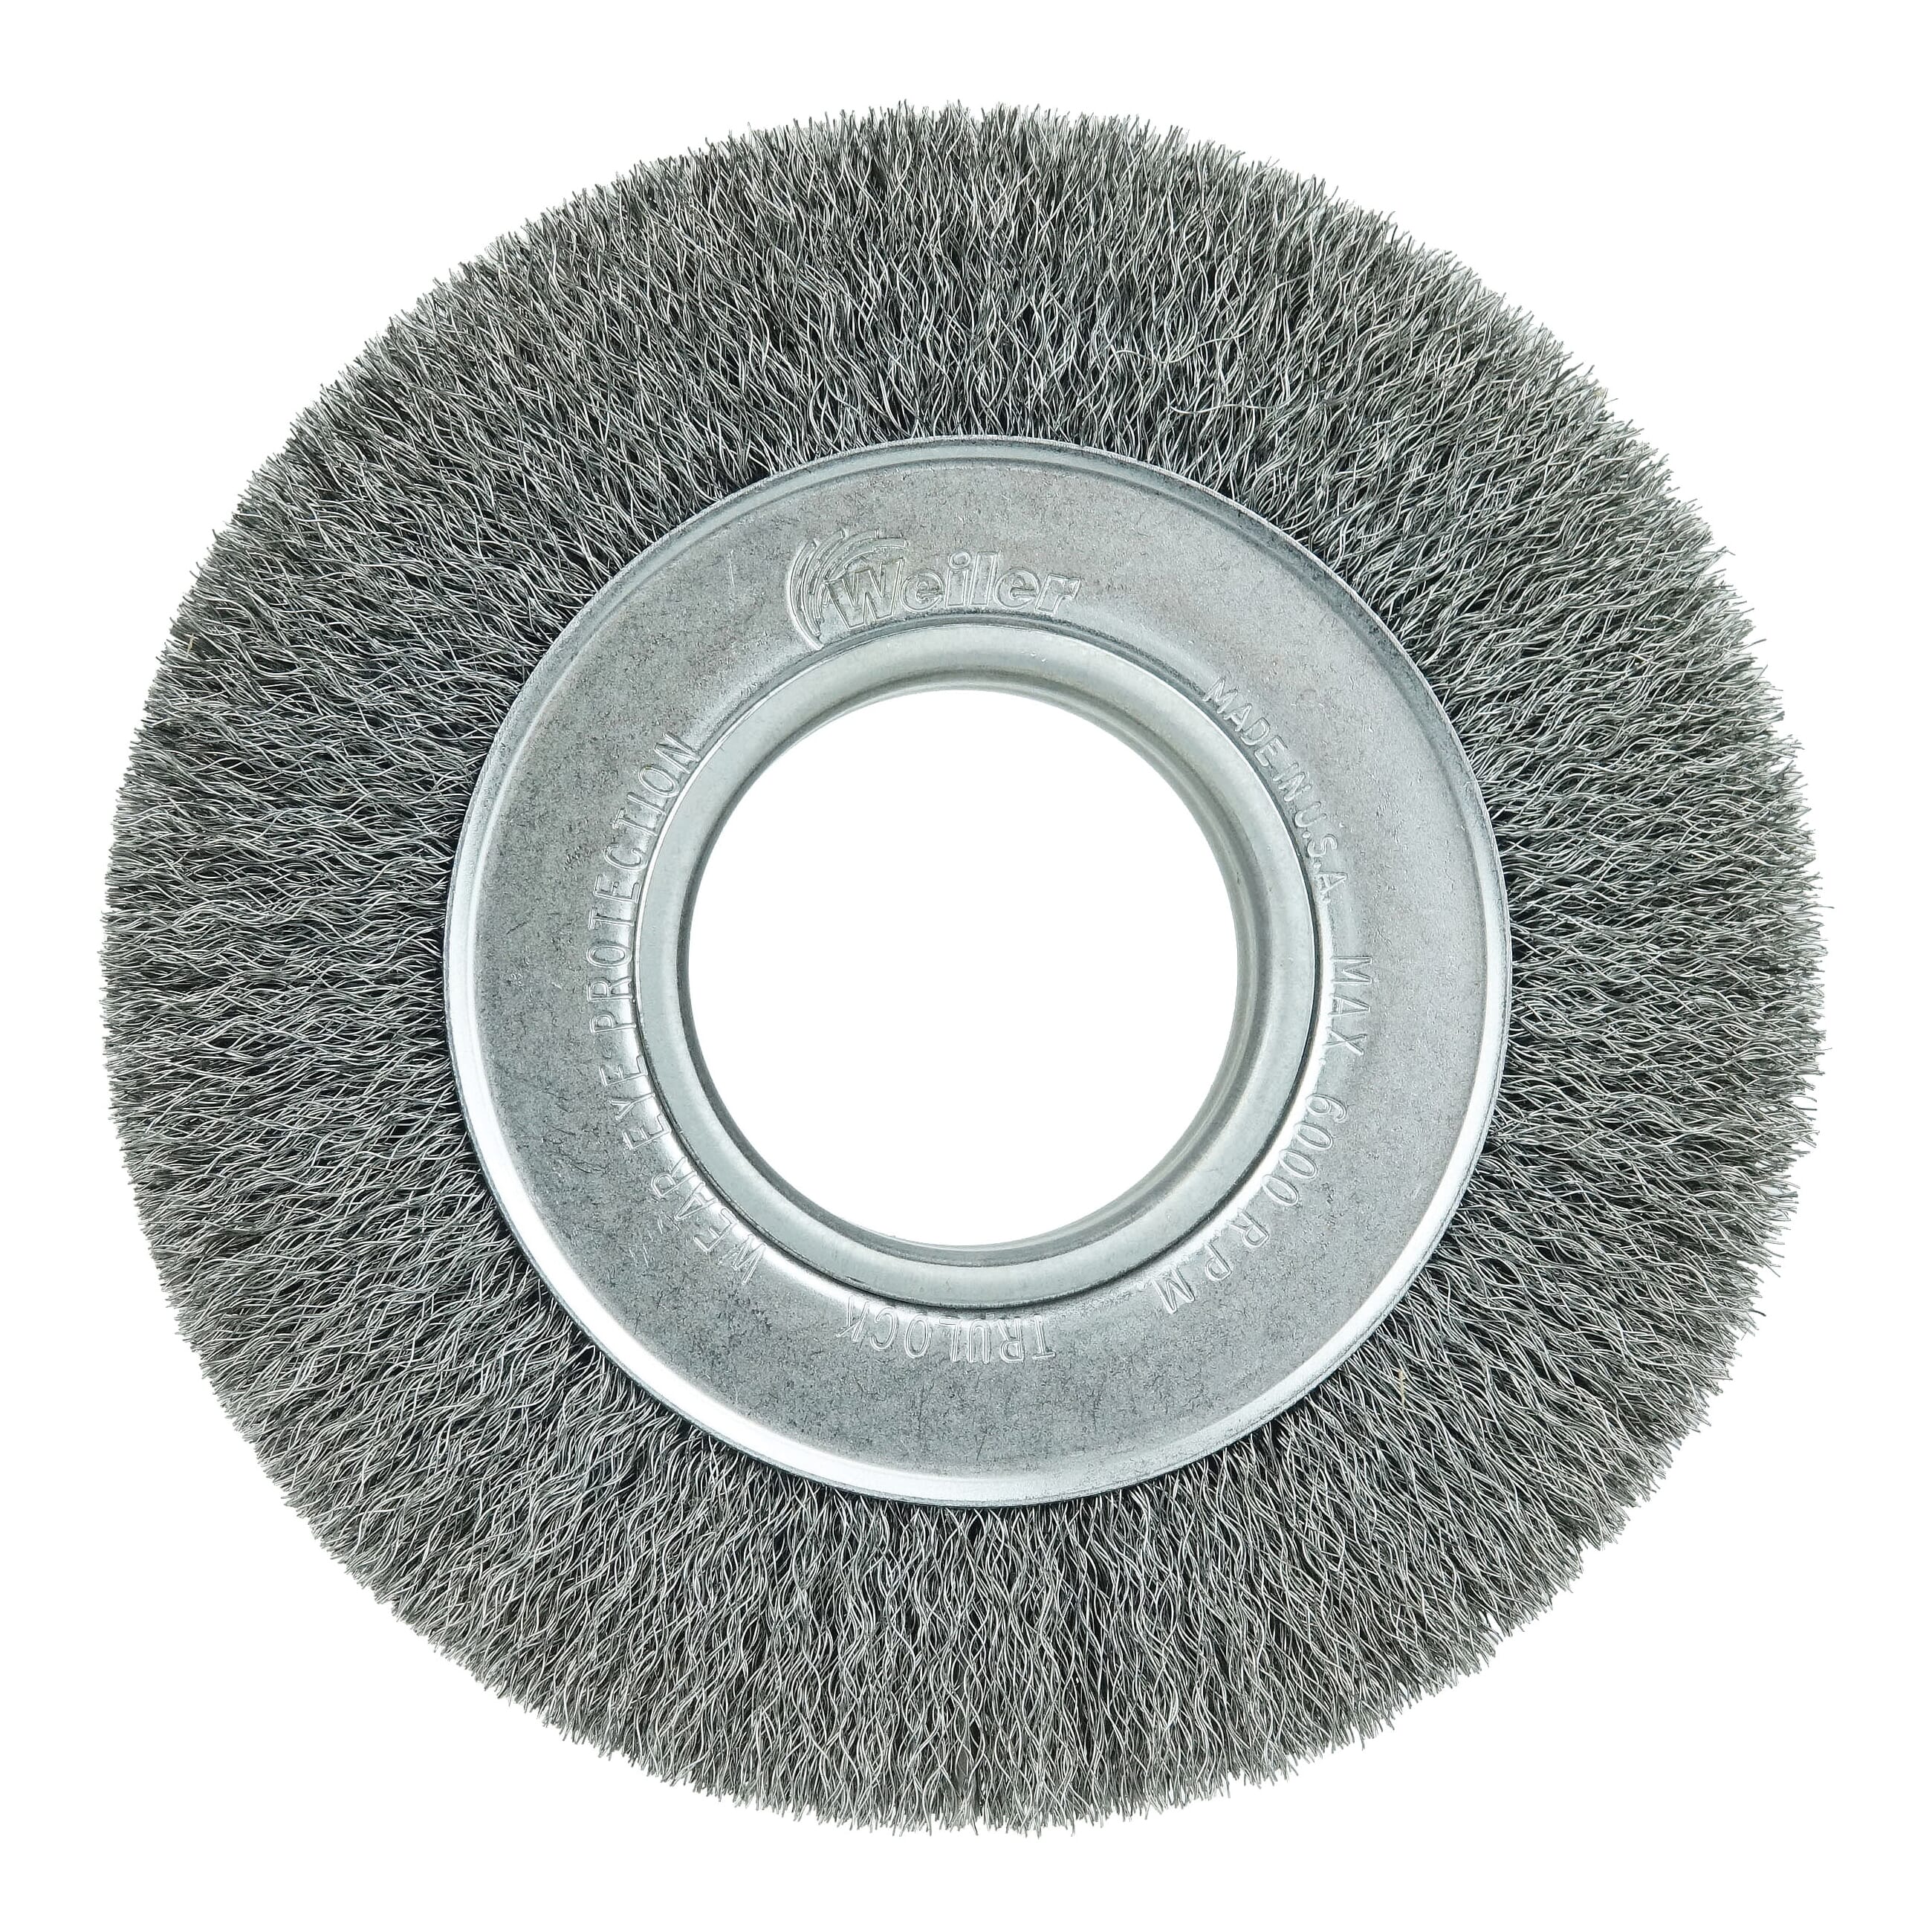 Weiler® 06060 Medium Face Wheel Brush, 6 in Dia Brush, 1 in W Face, 0.0104 in Dia Crimped Filament/Wire, 2 in Arbor Hole